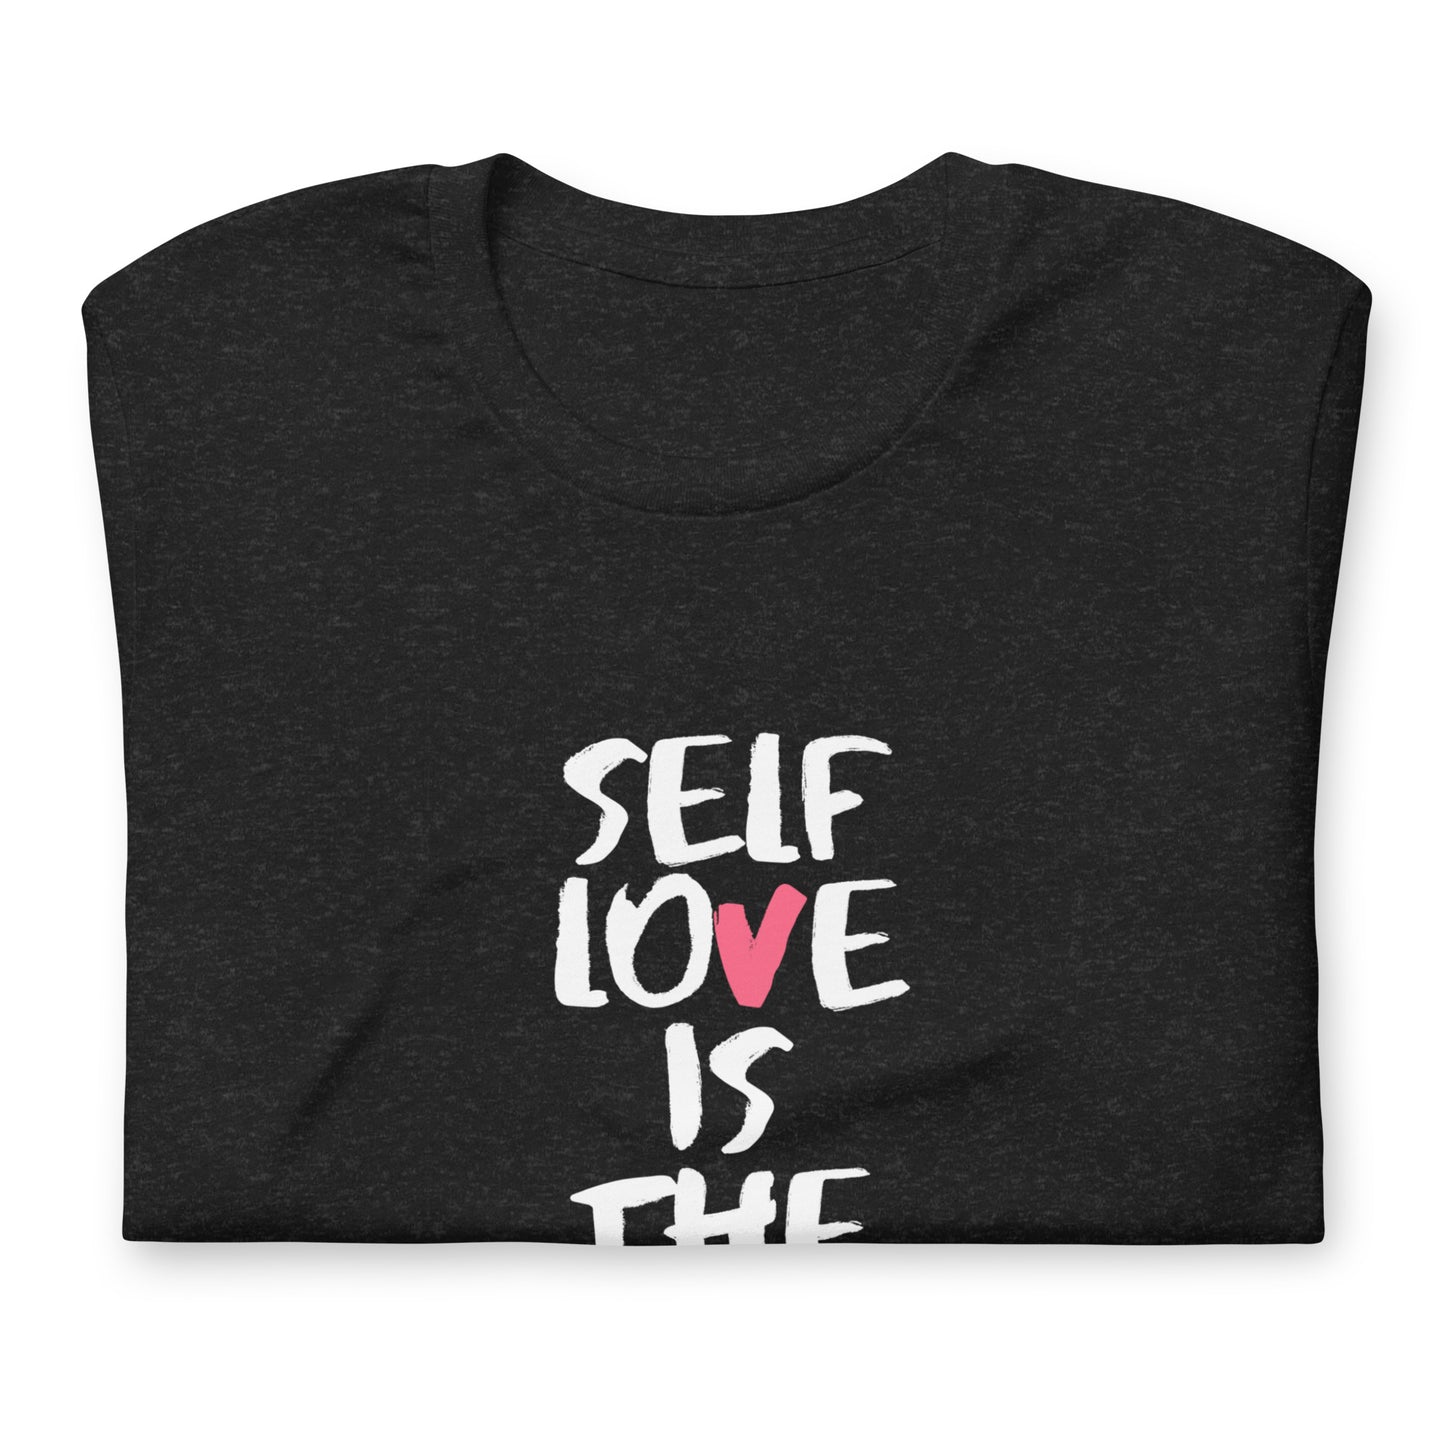 Best Love Adult T-shirt